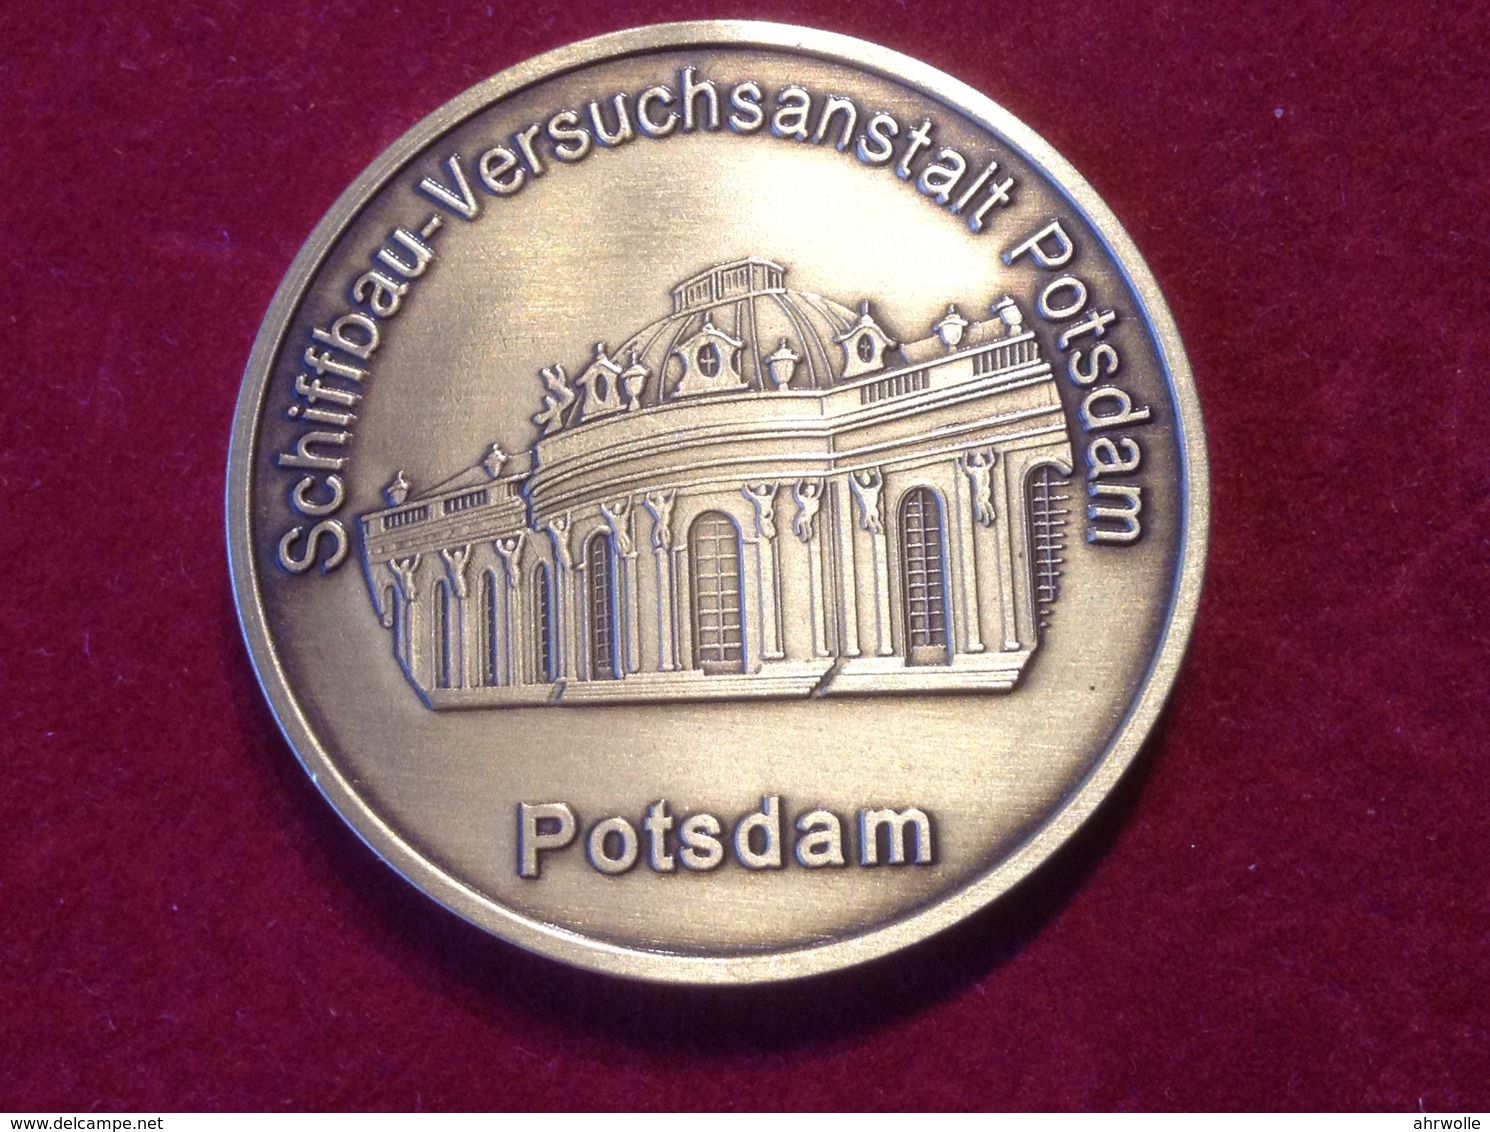 Medaille Schiffbau Versuchsanstalt Potsdam 2003 Erster Schleppwagen - Souvenirmunten (elongated Coins)